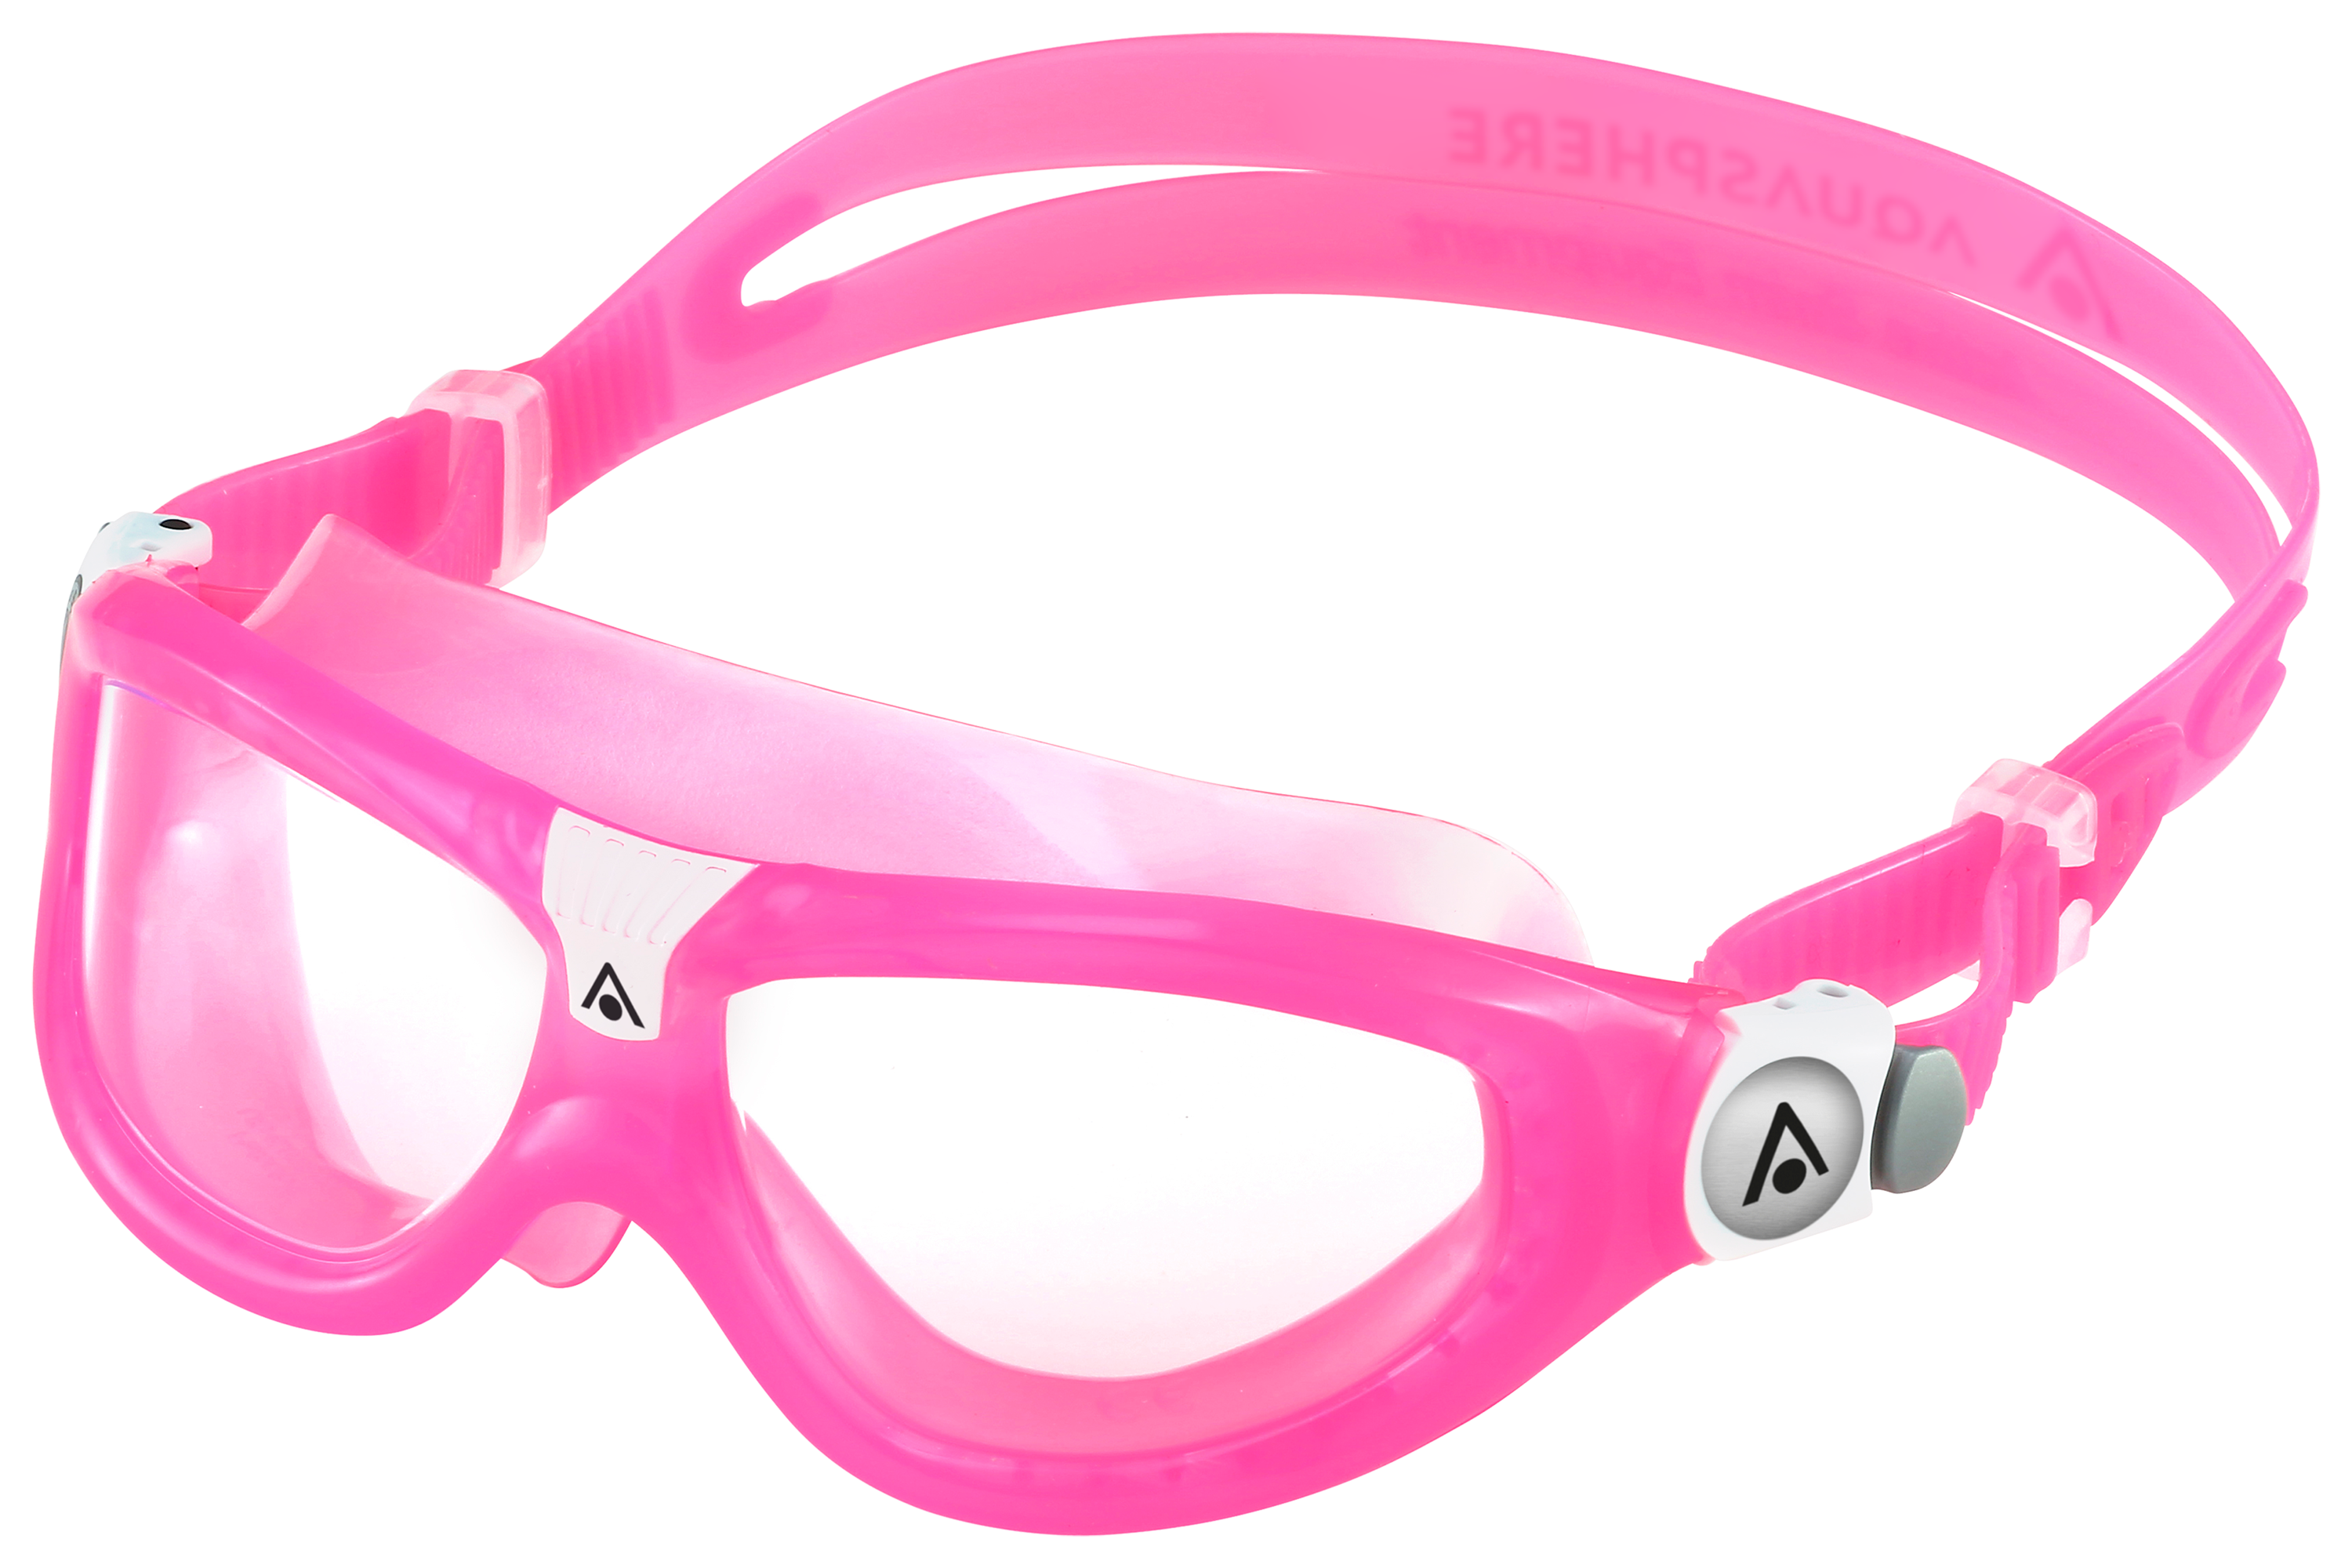 AquaSphere Seal 2 Swim Mask for Kids - Pink/Clear